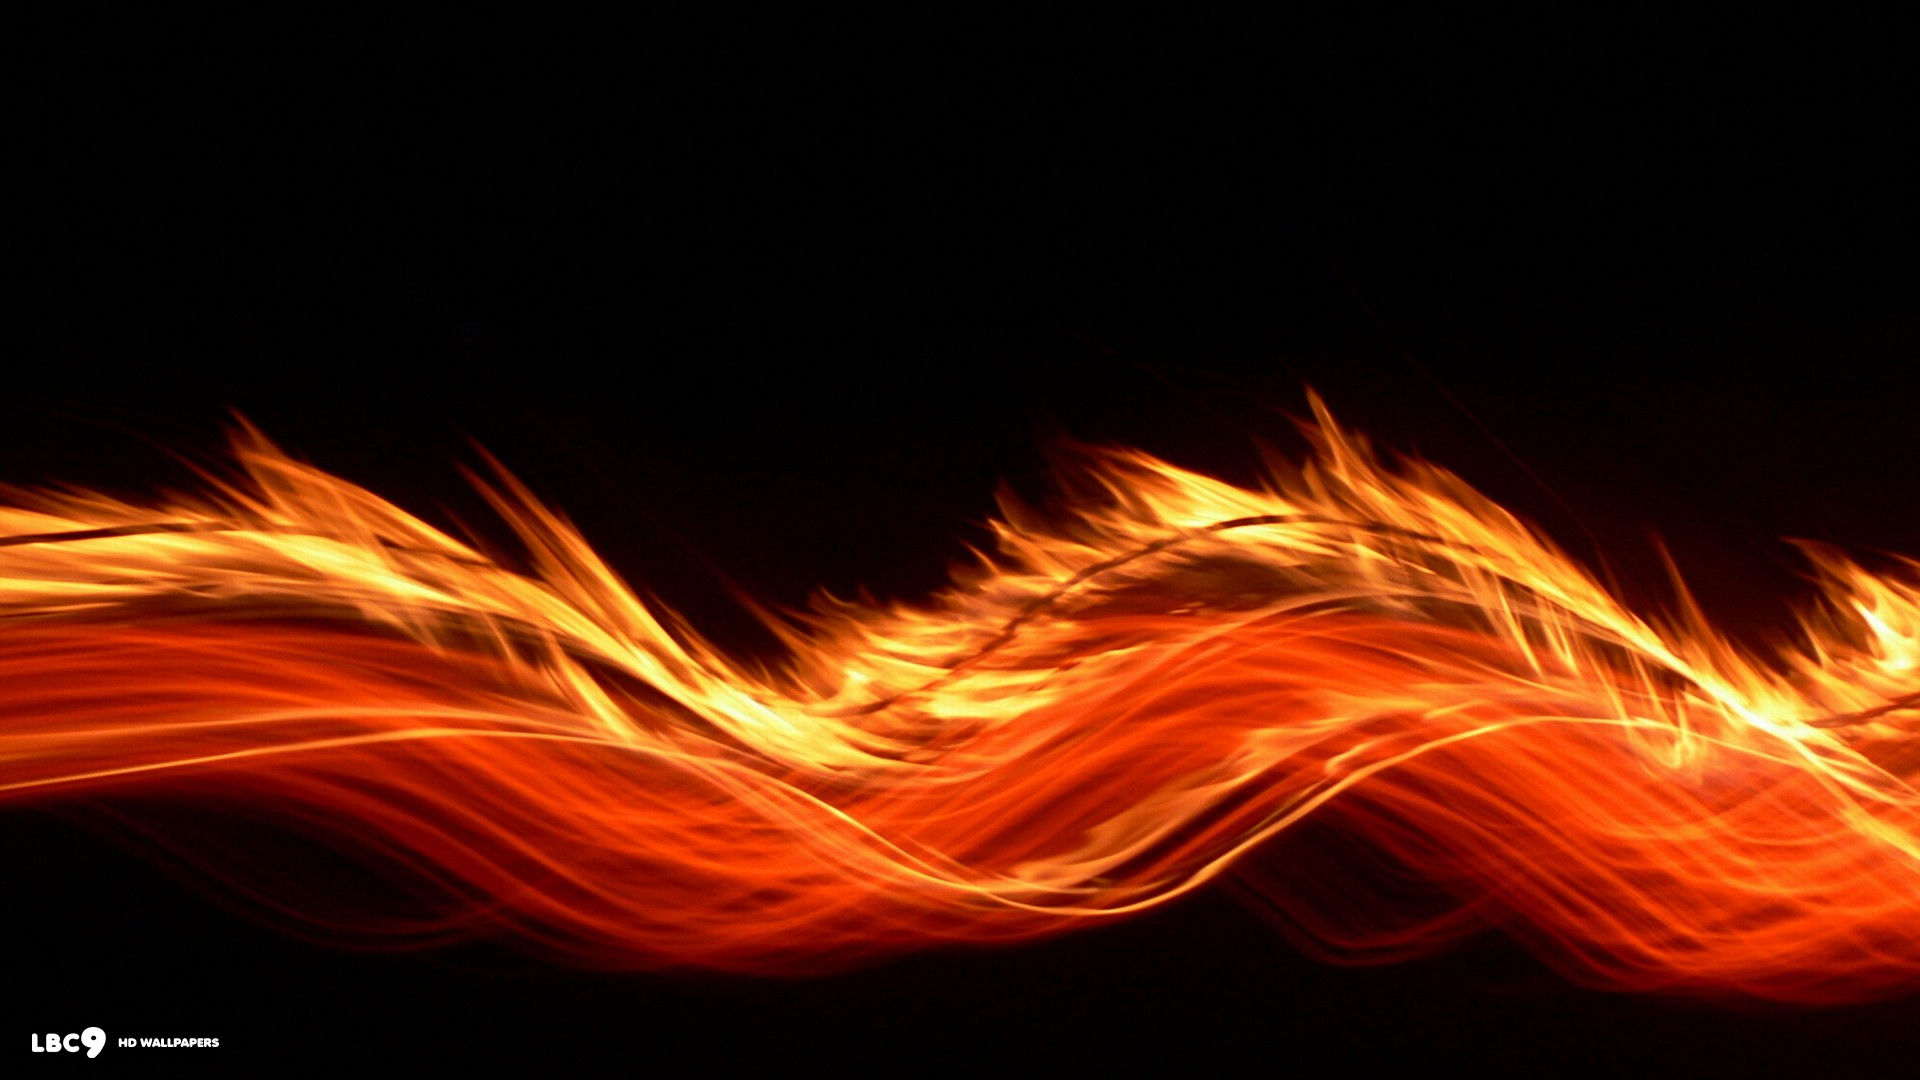 flame wallpaper hd,flame,fire,heat,orange,light